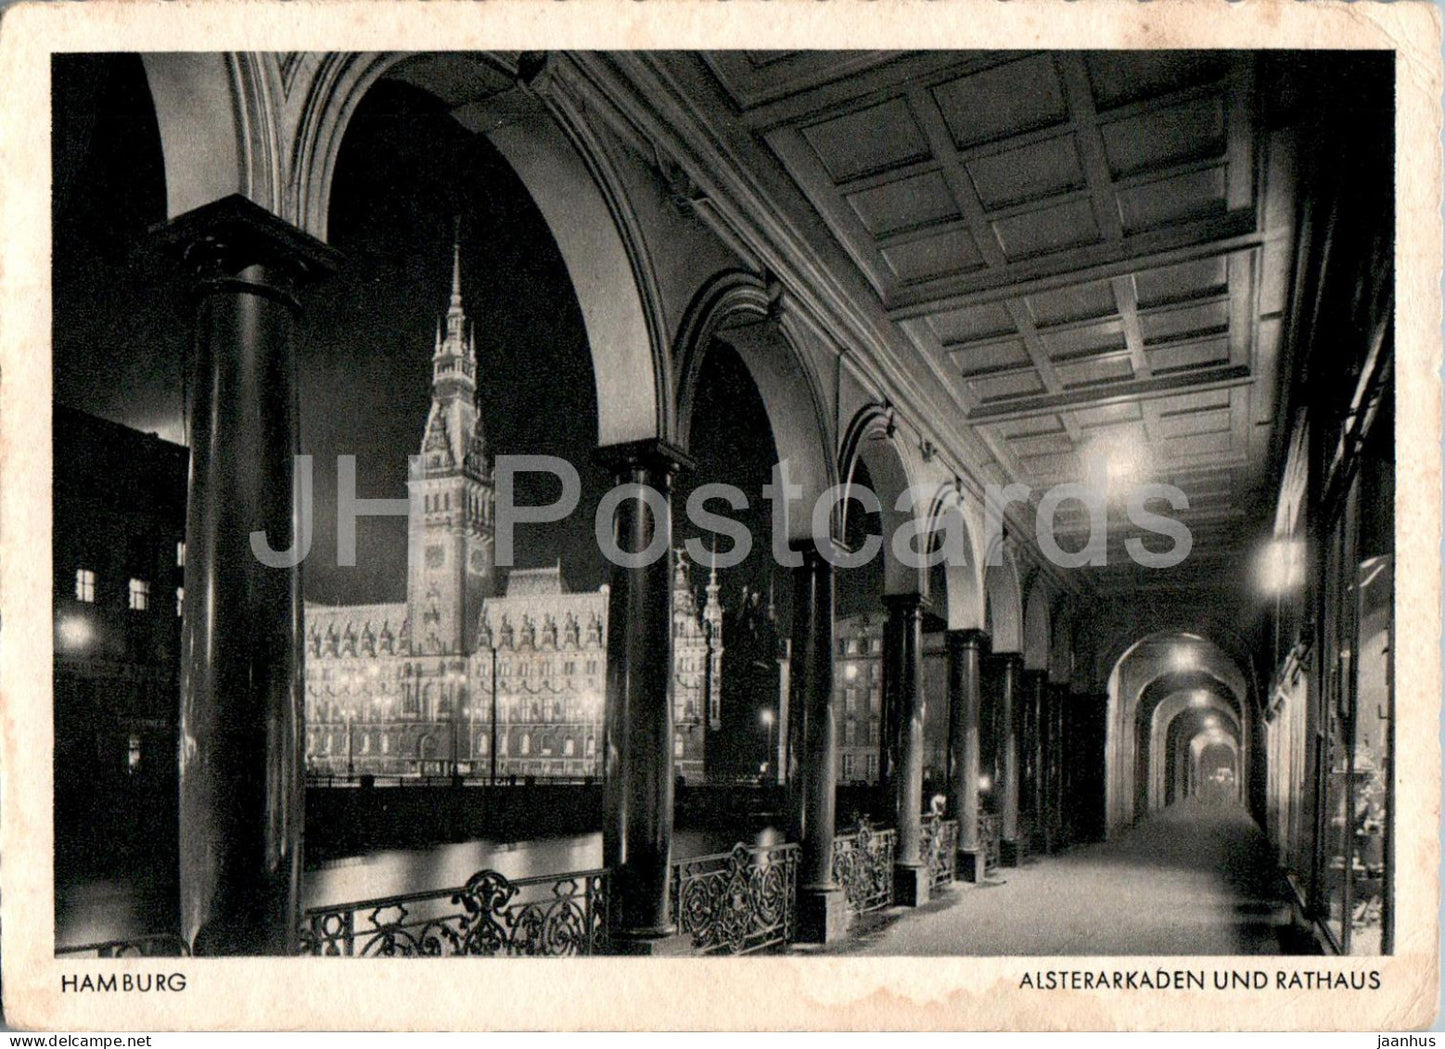 Hamburg - Alsterarkaden und Rathaus - 9189 - old postcard - 1952 - Germany - used - JH Postcards